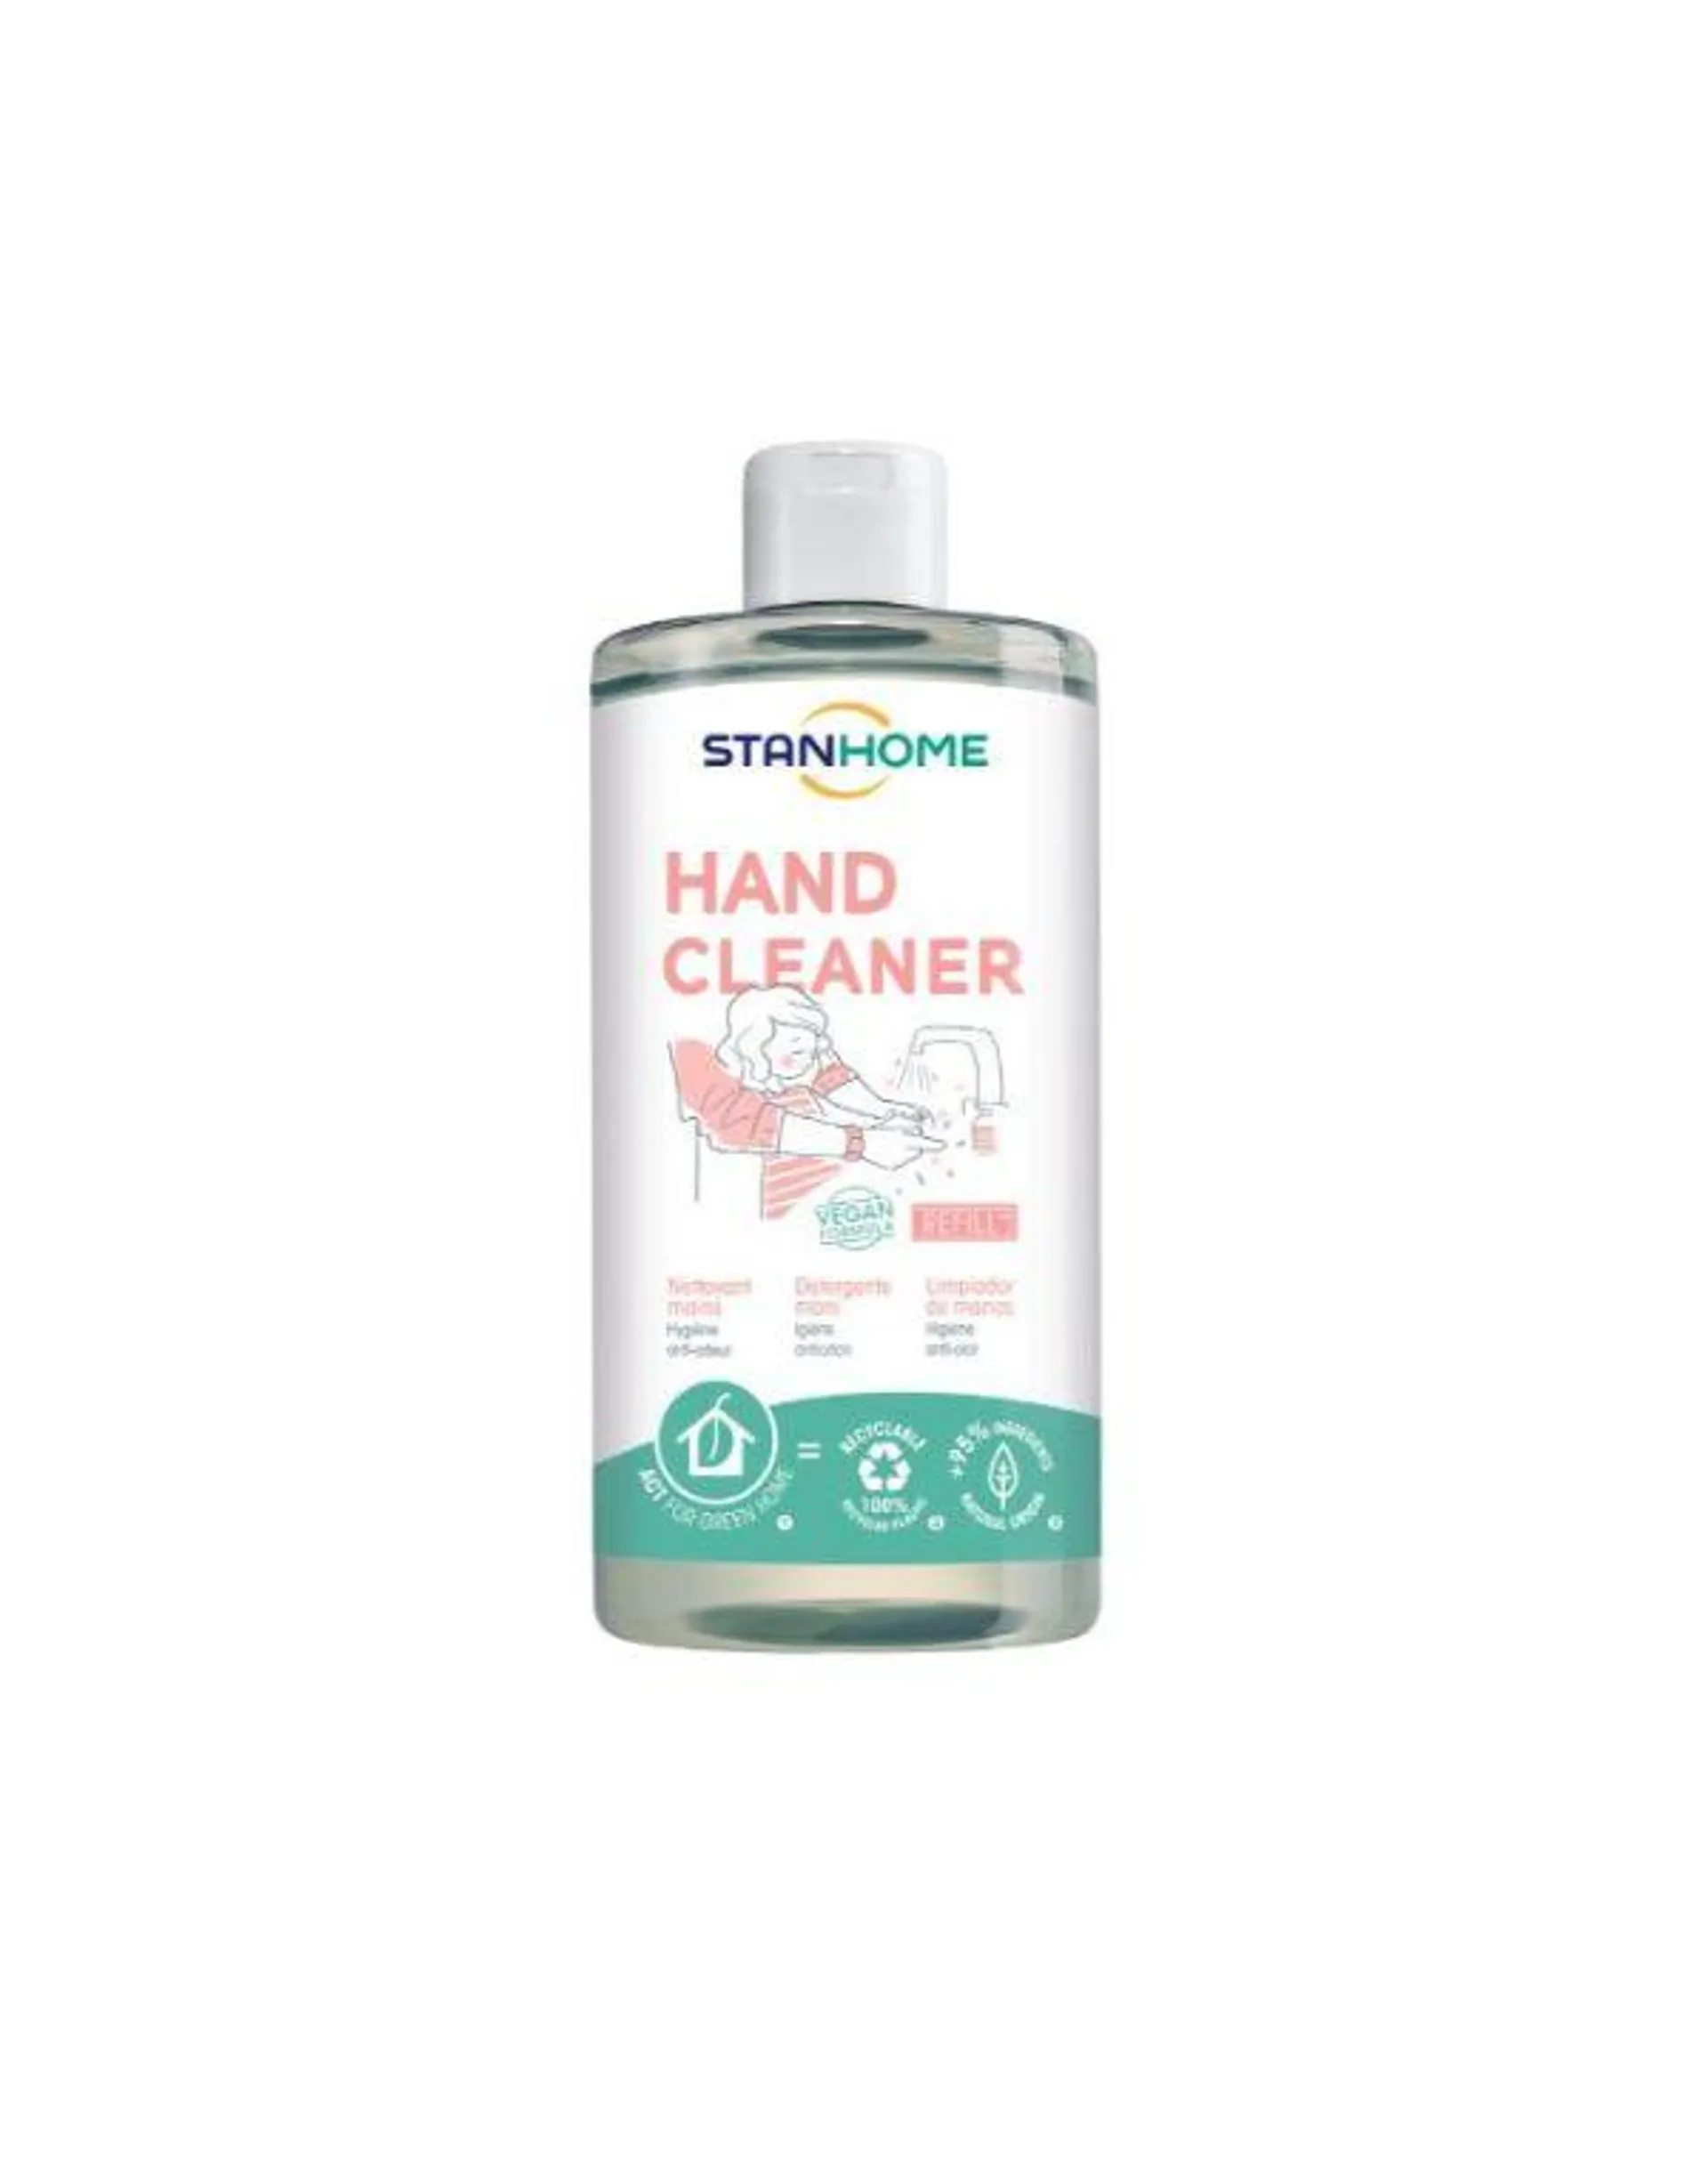 HAND CLEANER REFILL 600 ML